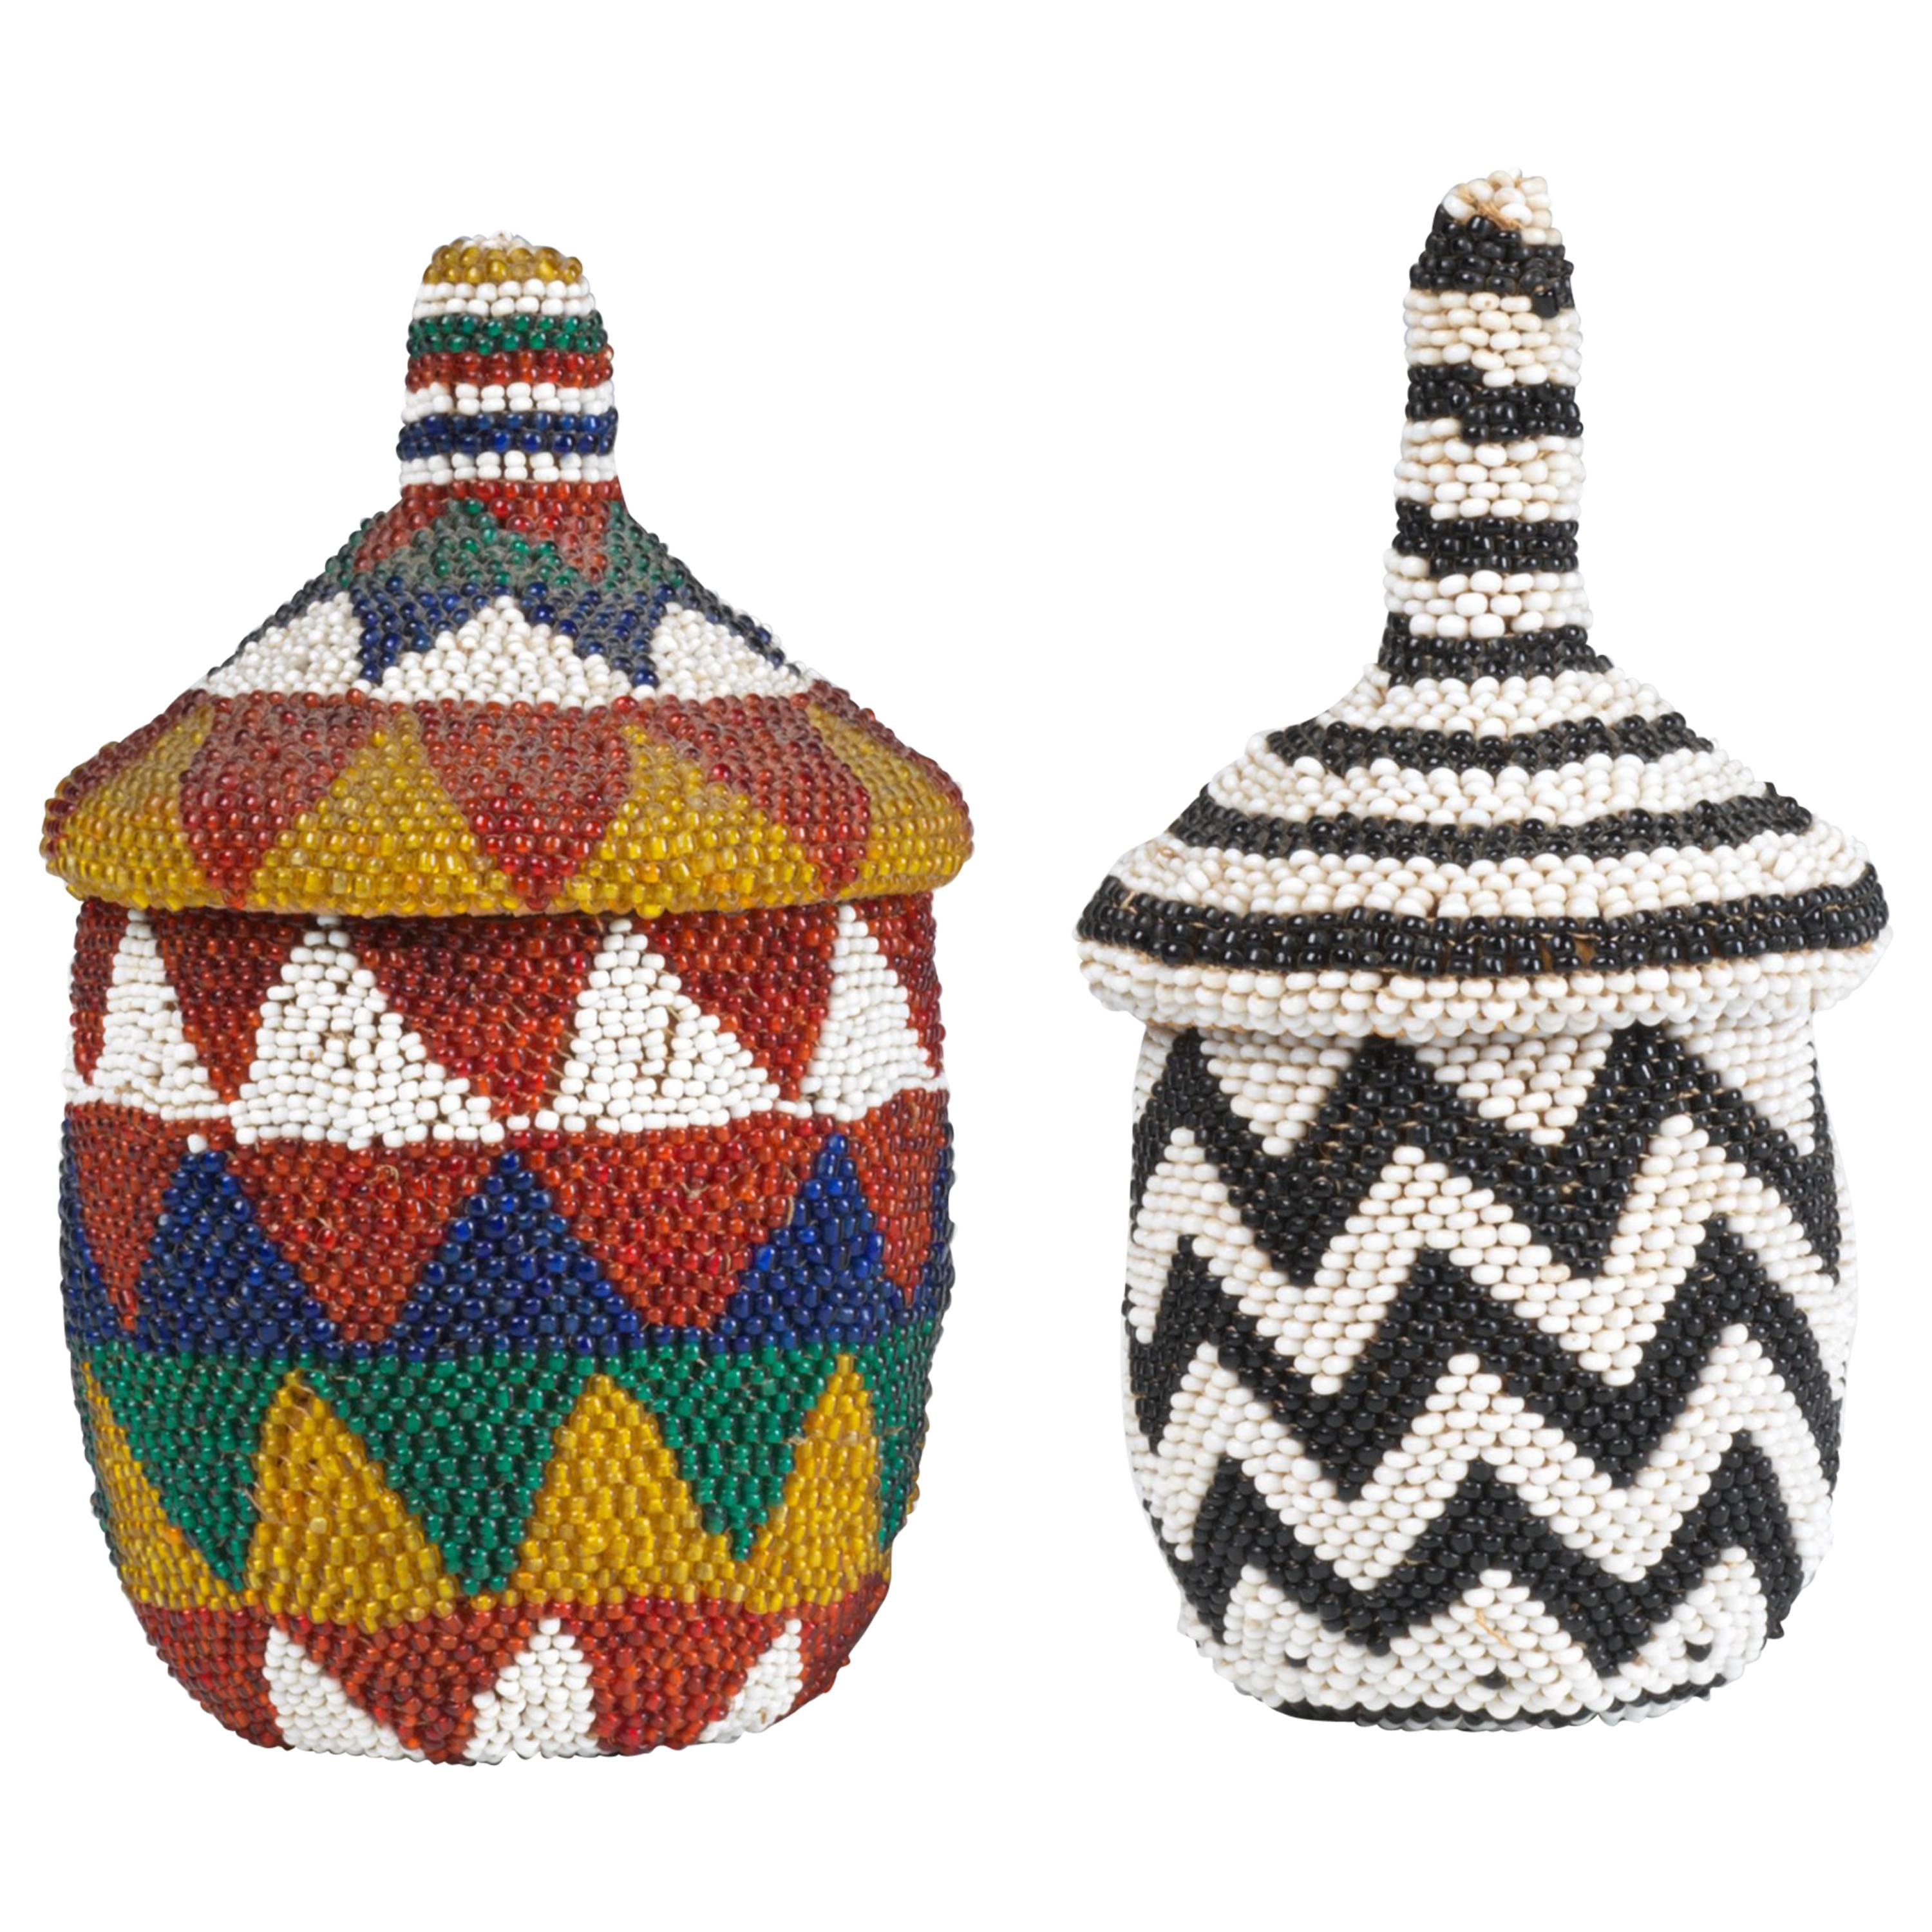 Pair of Tutsi Beaded Baskets Tribal Art from Rwanda